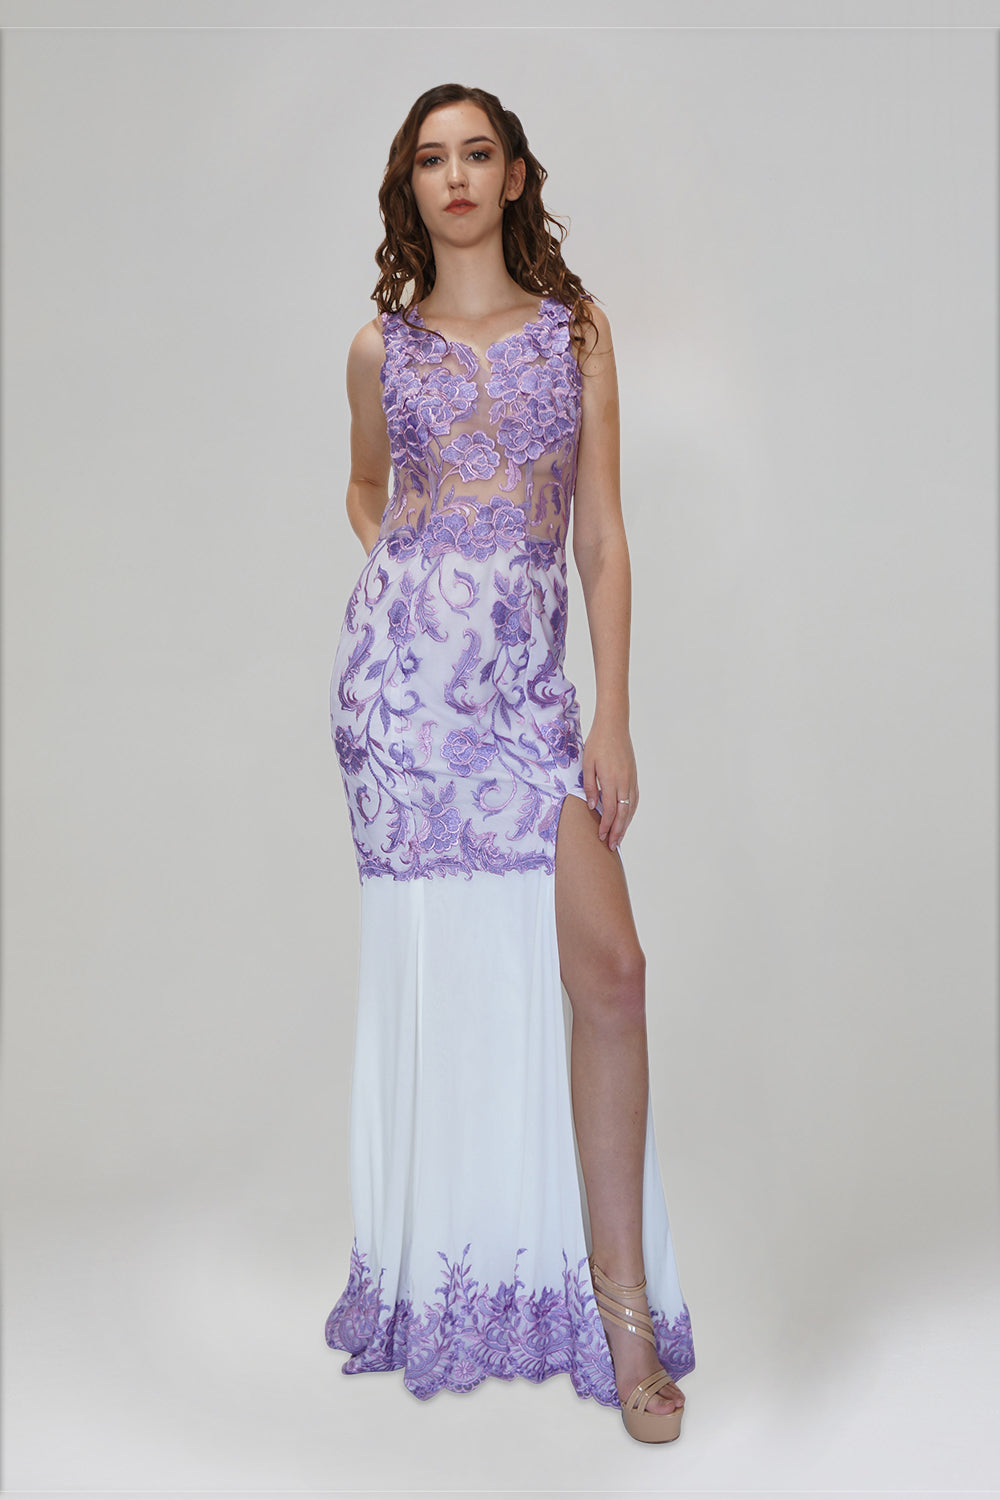 custom purple white bridesmaid dresses perth australia online envious bridal & formal